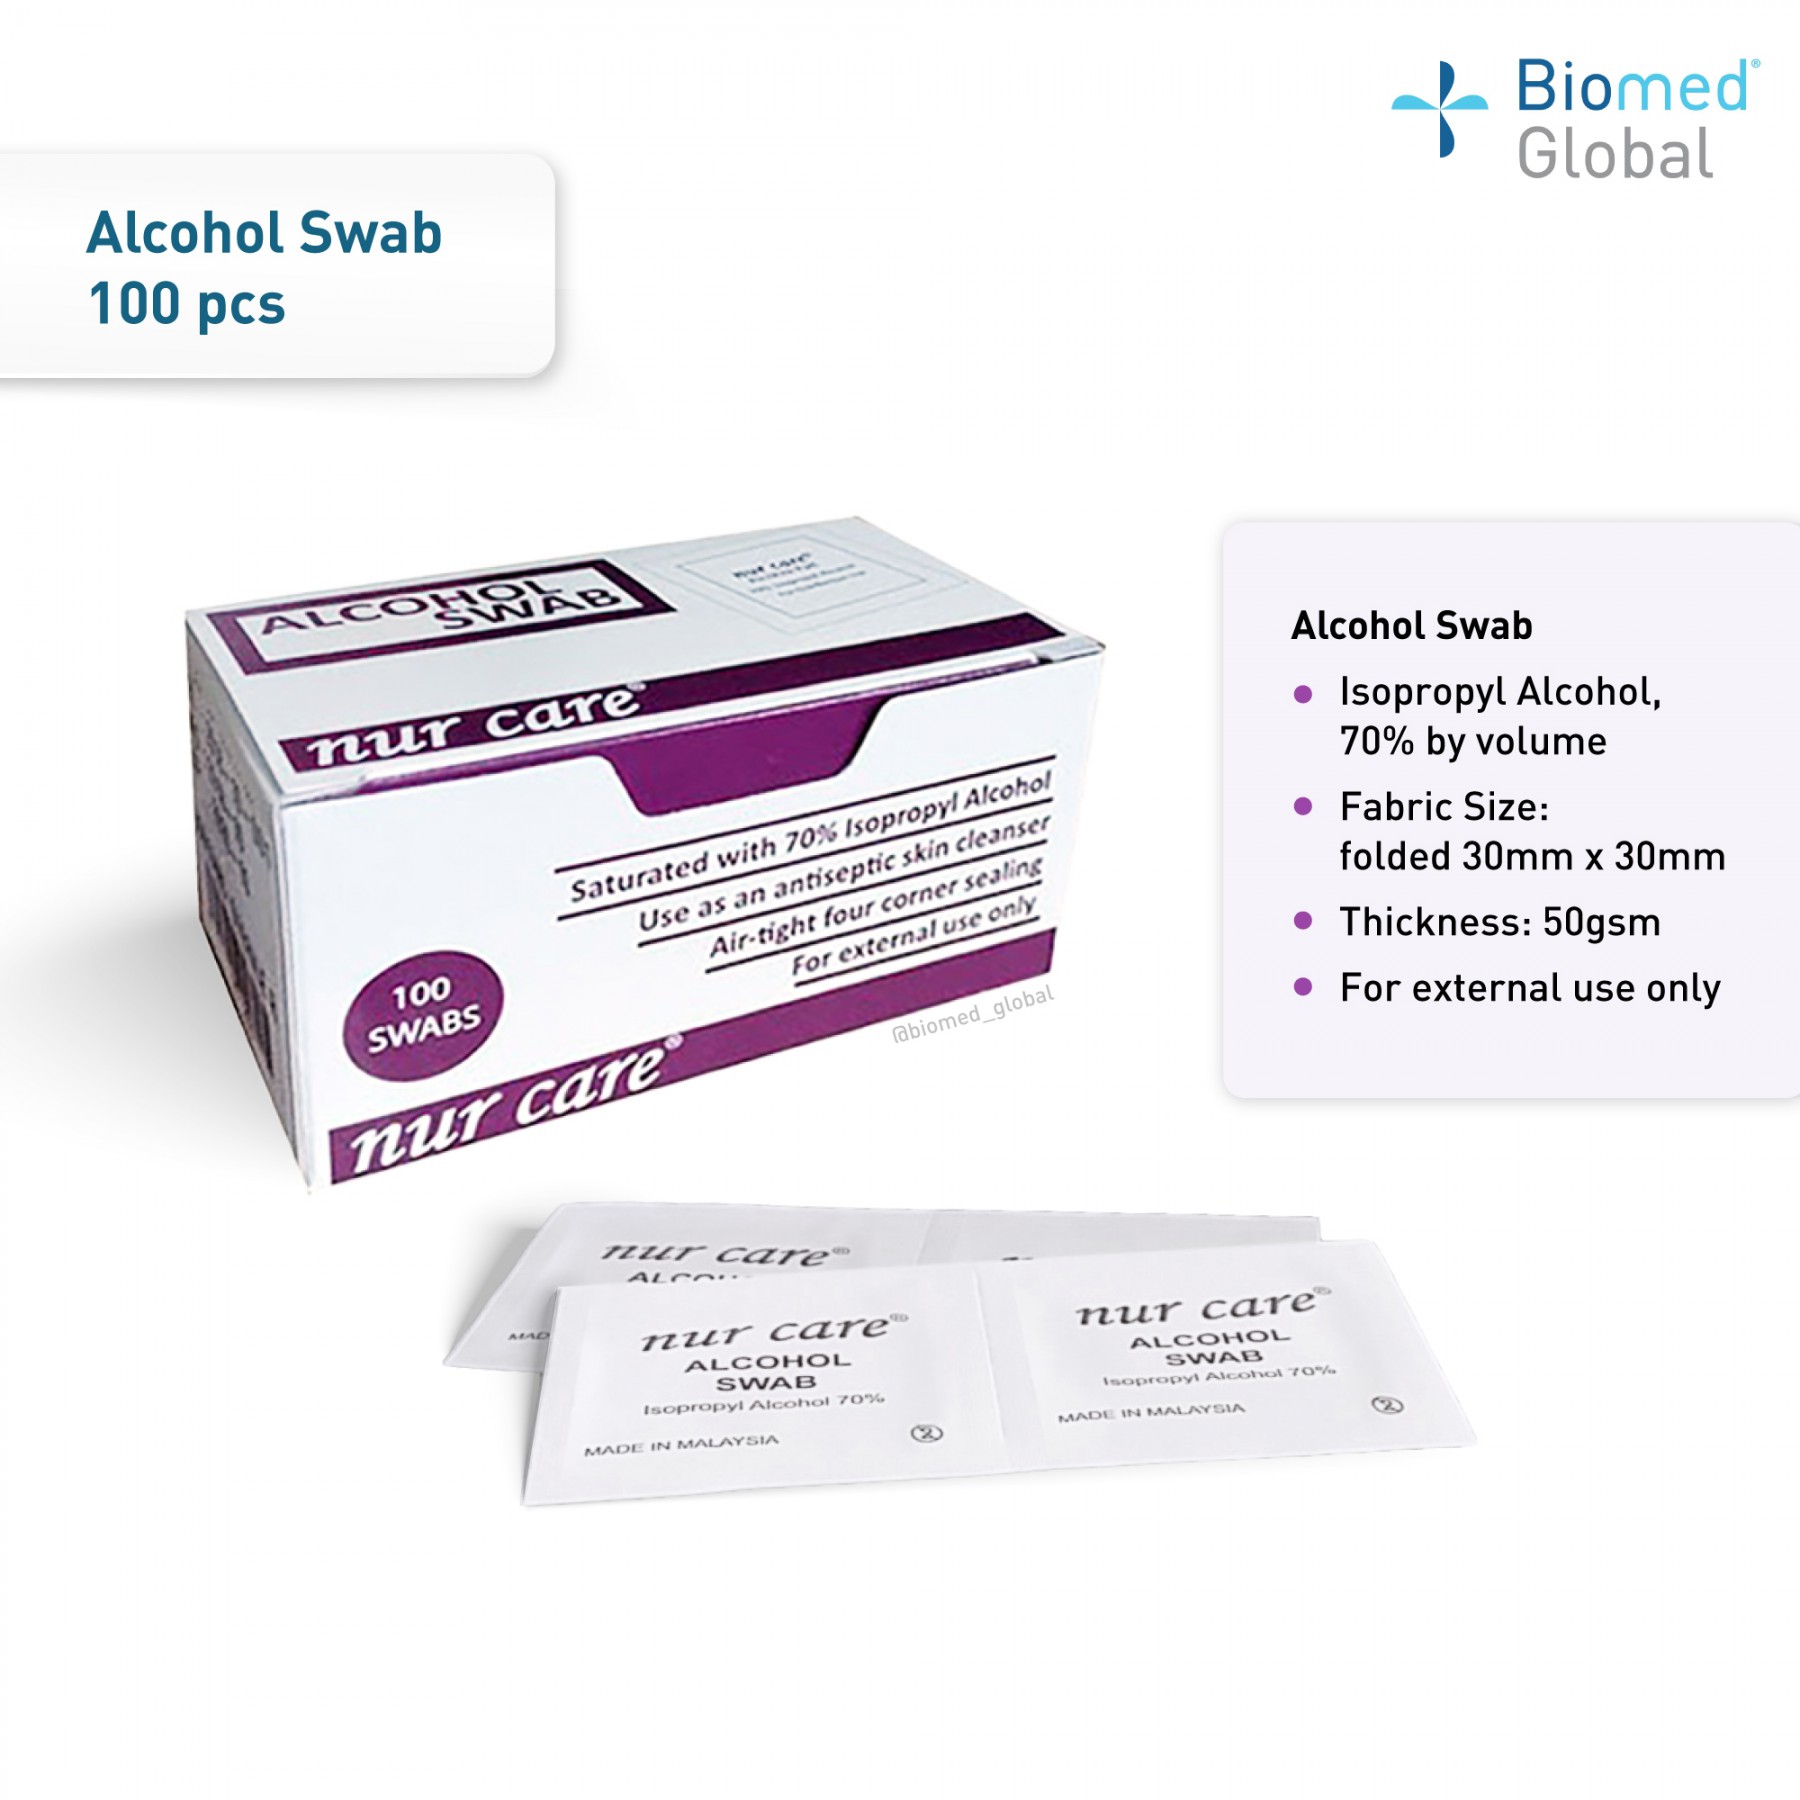 PRODIGY POCKET Blood Glucose Meter Kit, FREE with 100’s Blood Lancet & 100’s Alcohol Swab (BUNDLE PACKAGE)